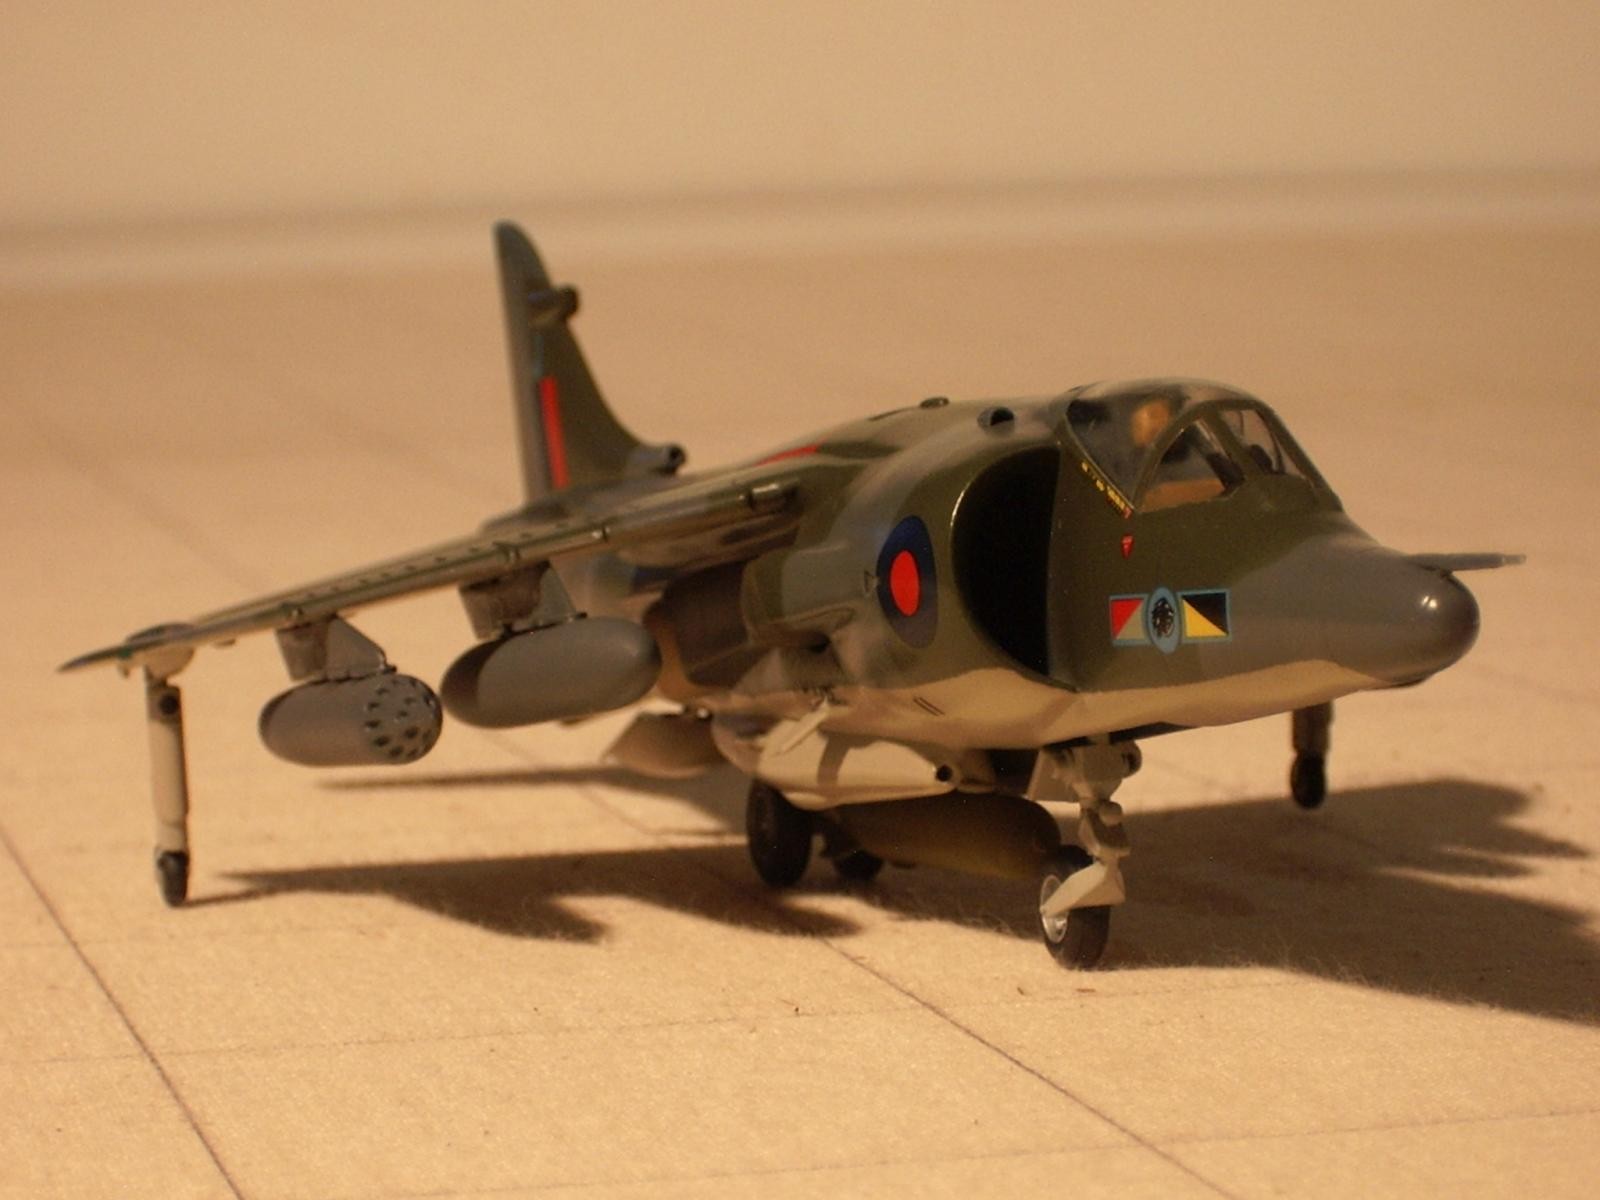 XV810 - Royal Air Force British Aerospace Harrier GR.3 at Newark Air Museum, Photo ID 299350